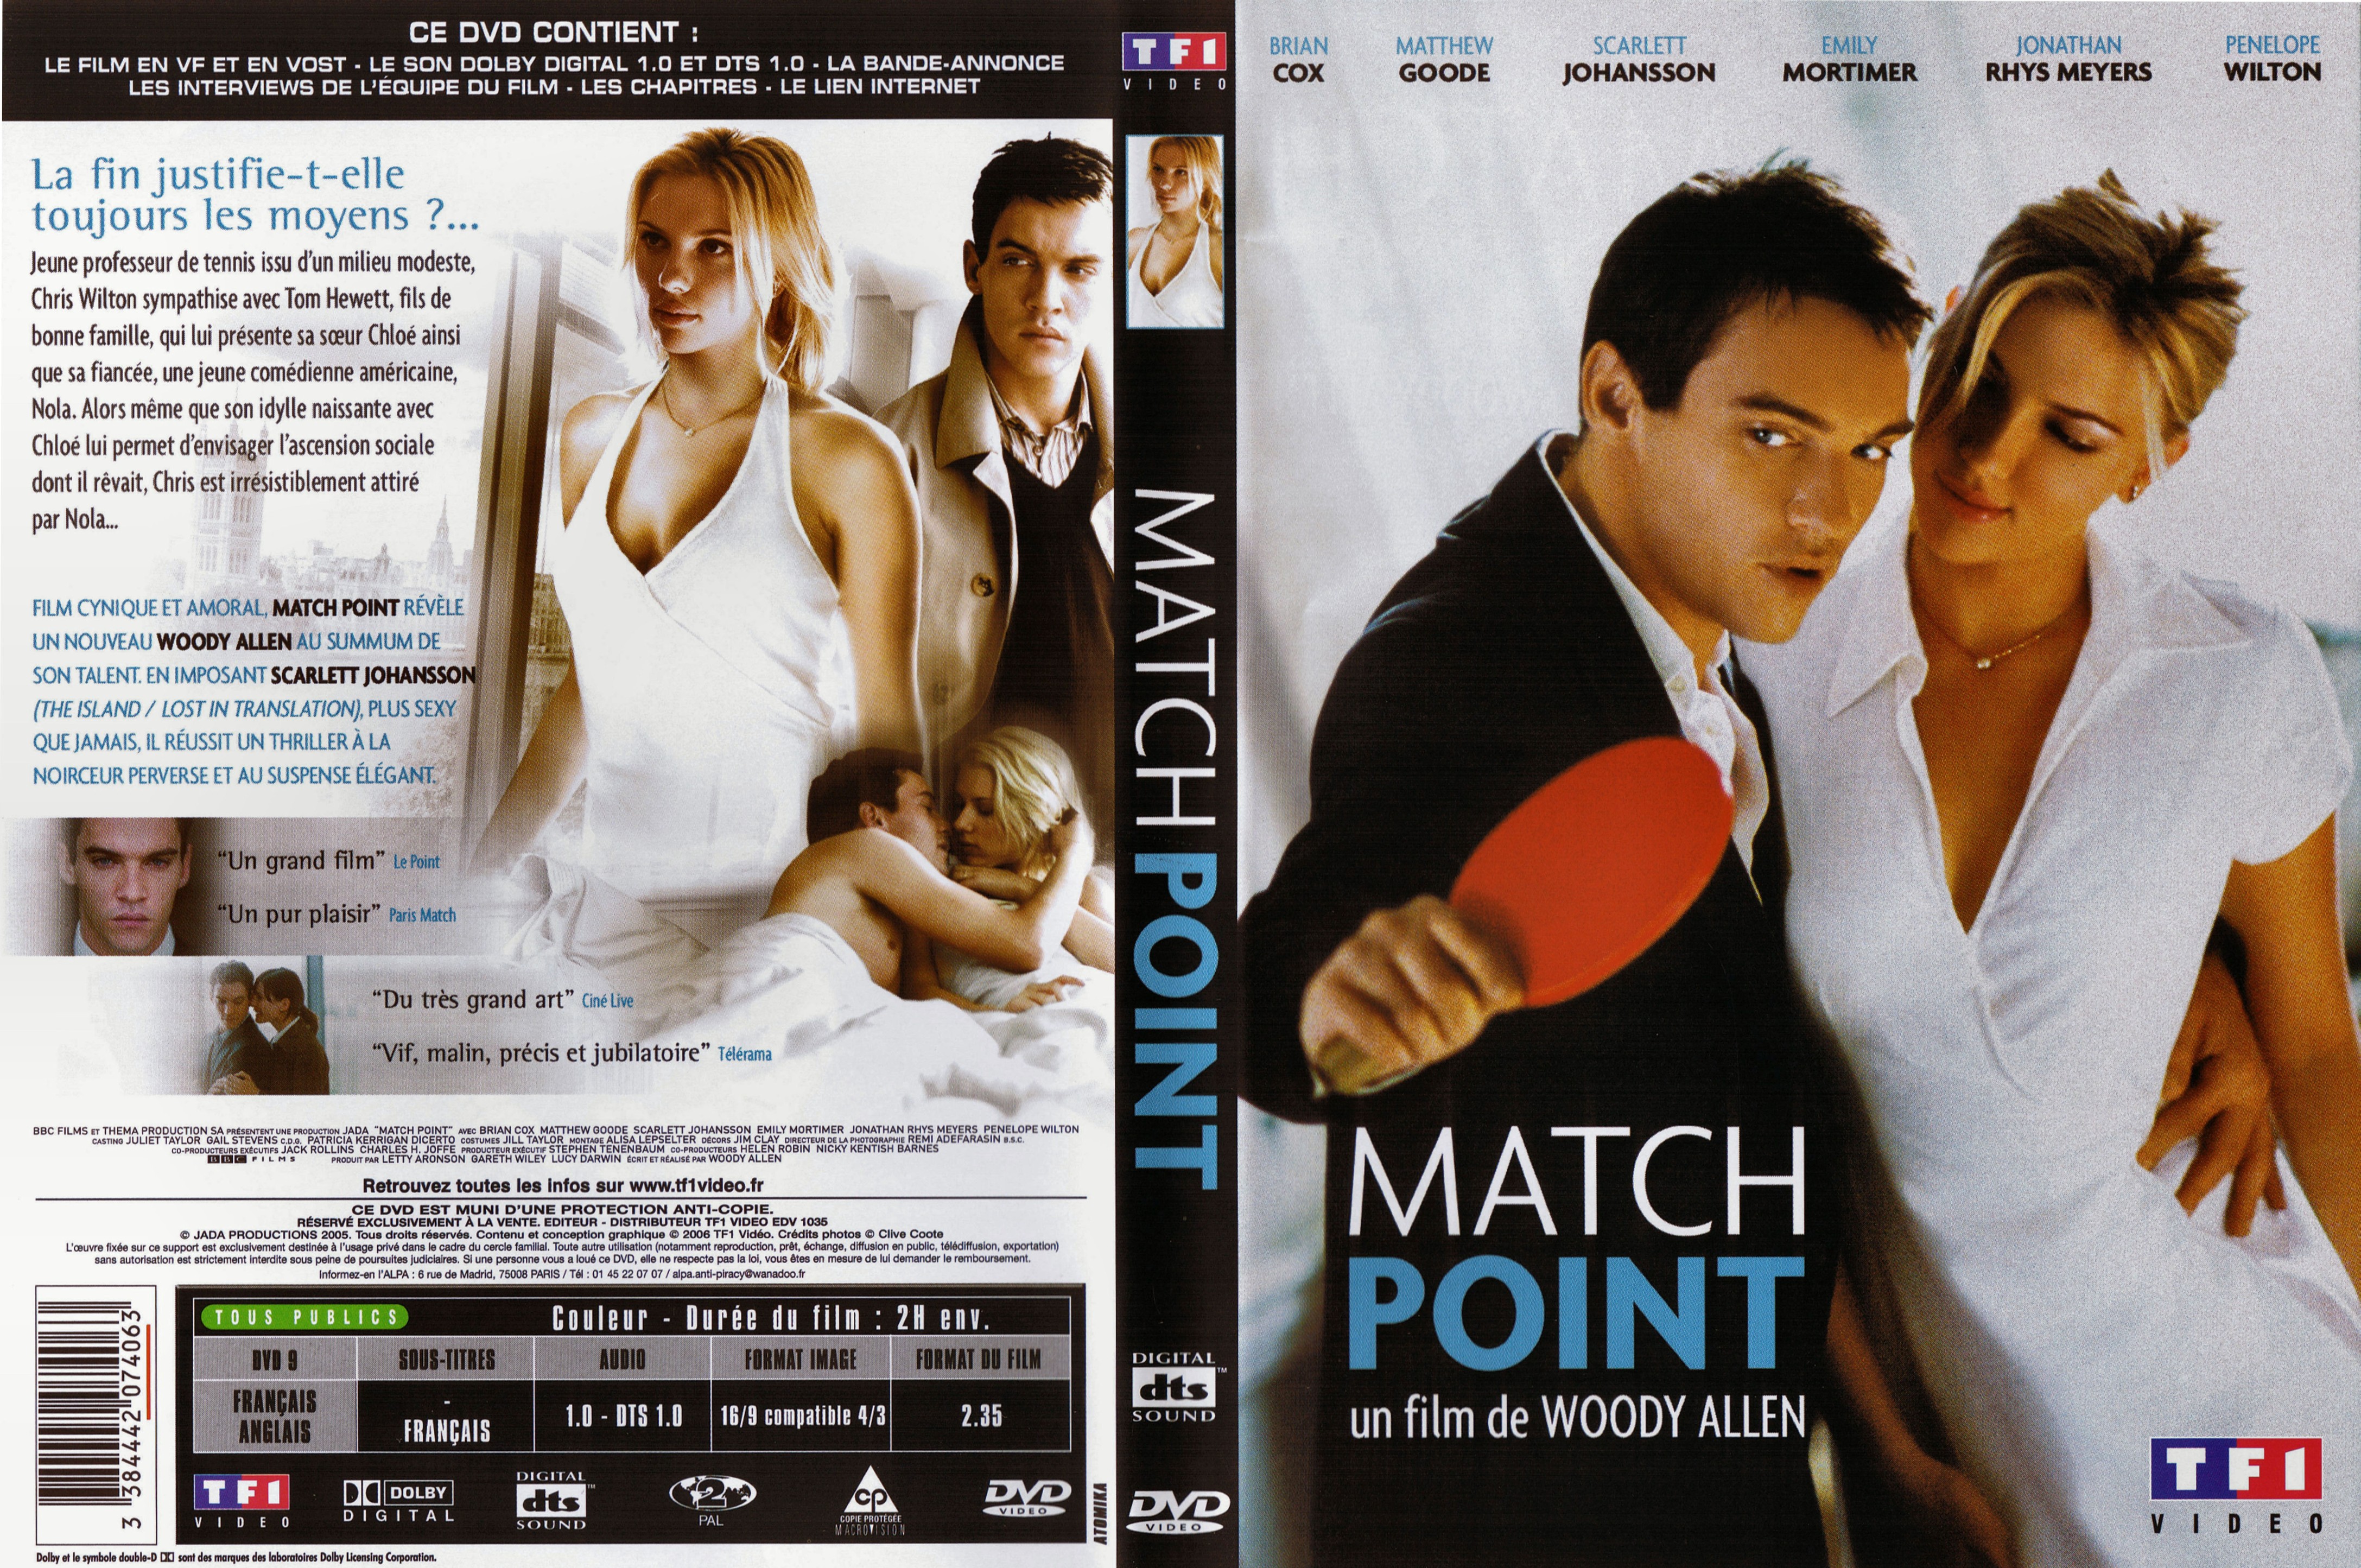 Jaquette DVD Match Point v2